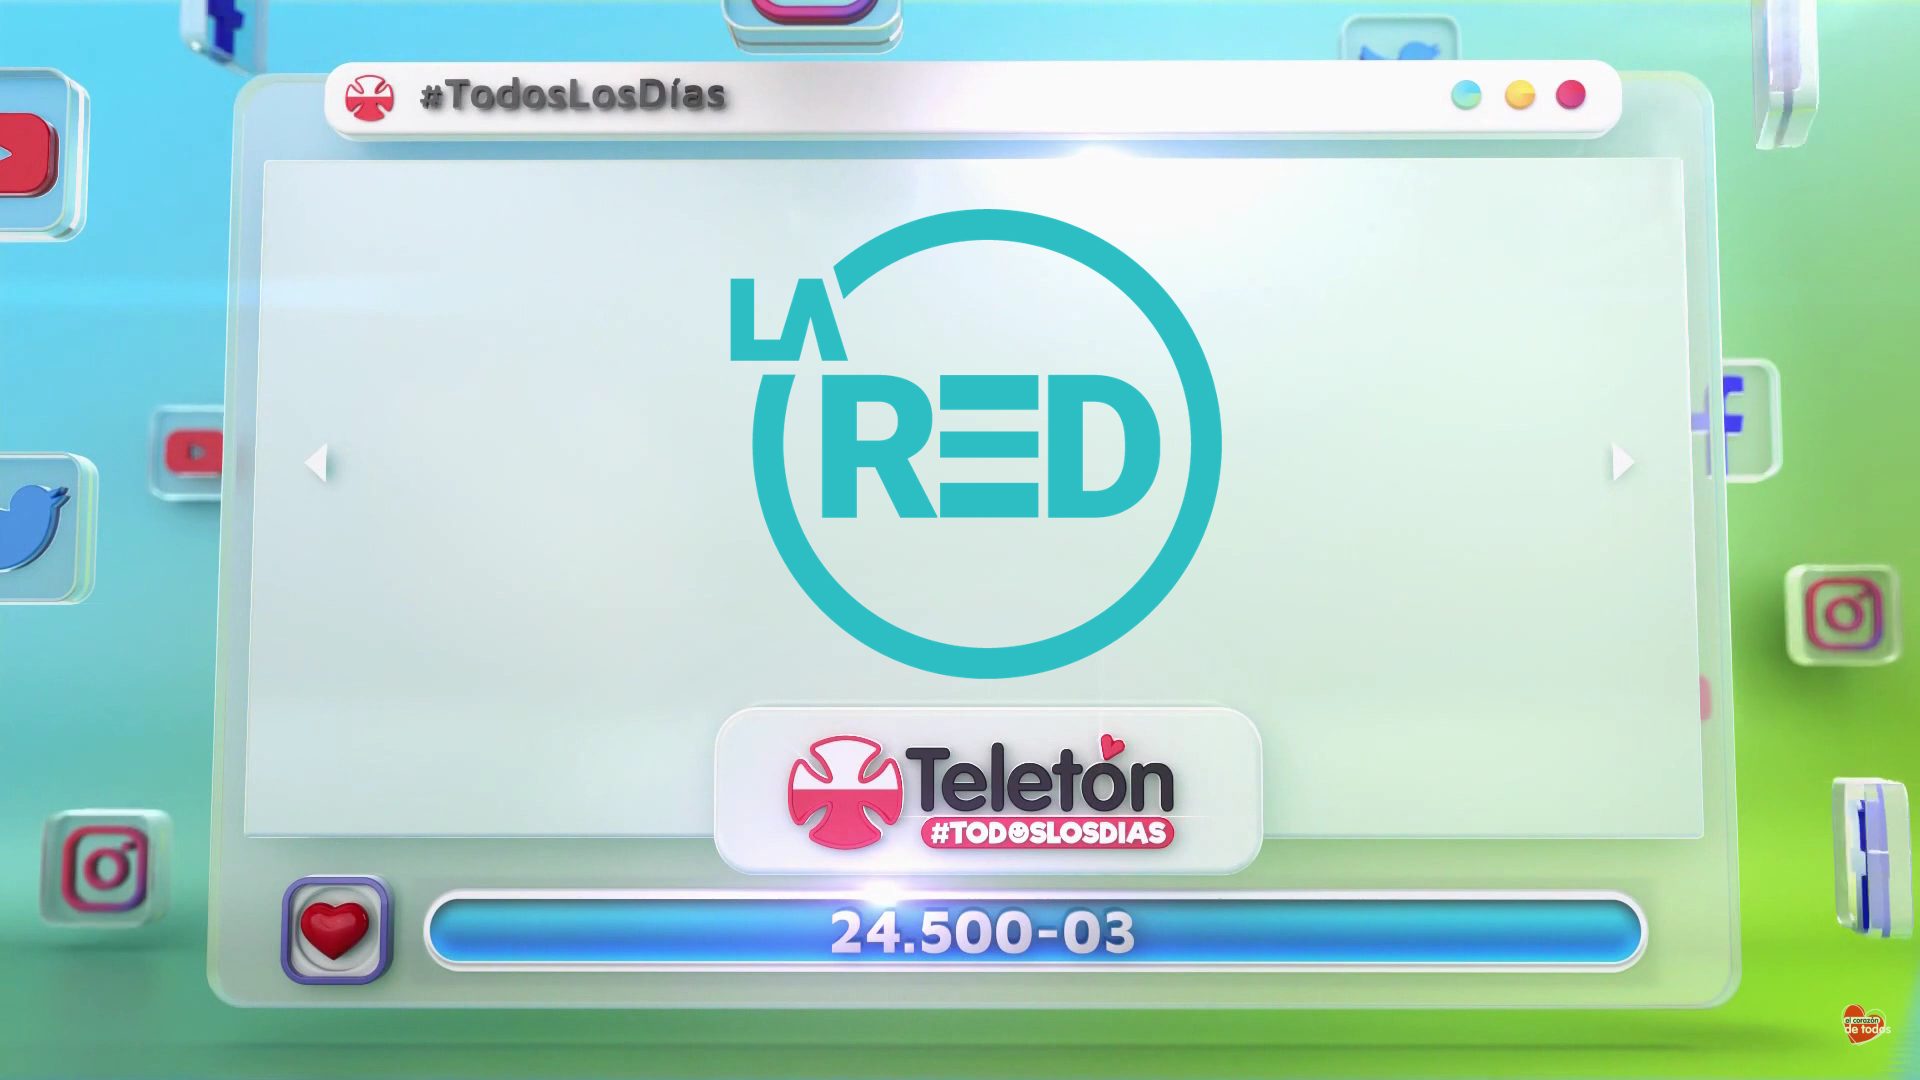 La Red / Teletón